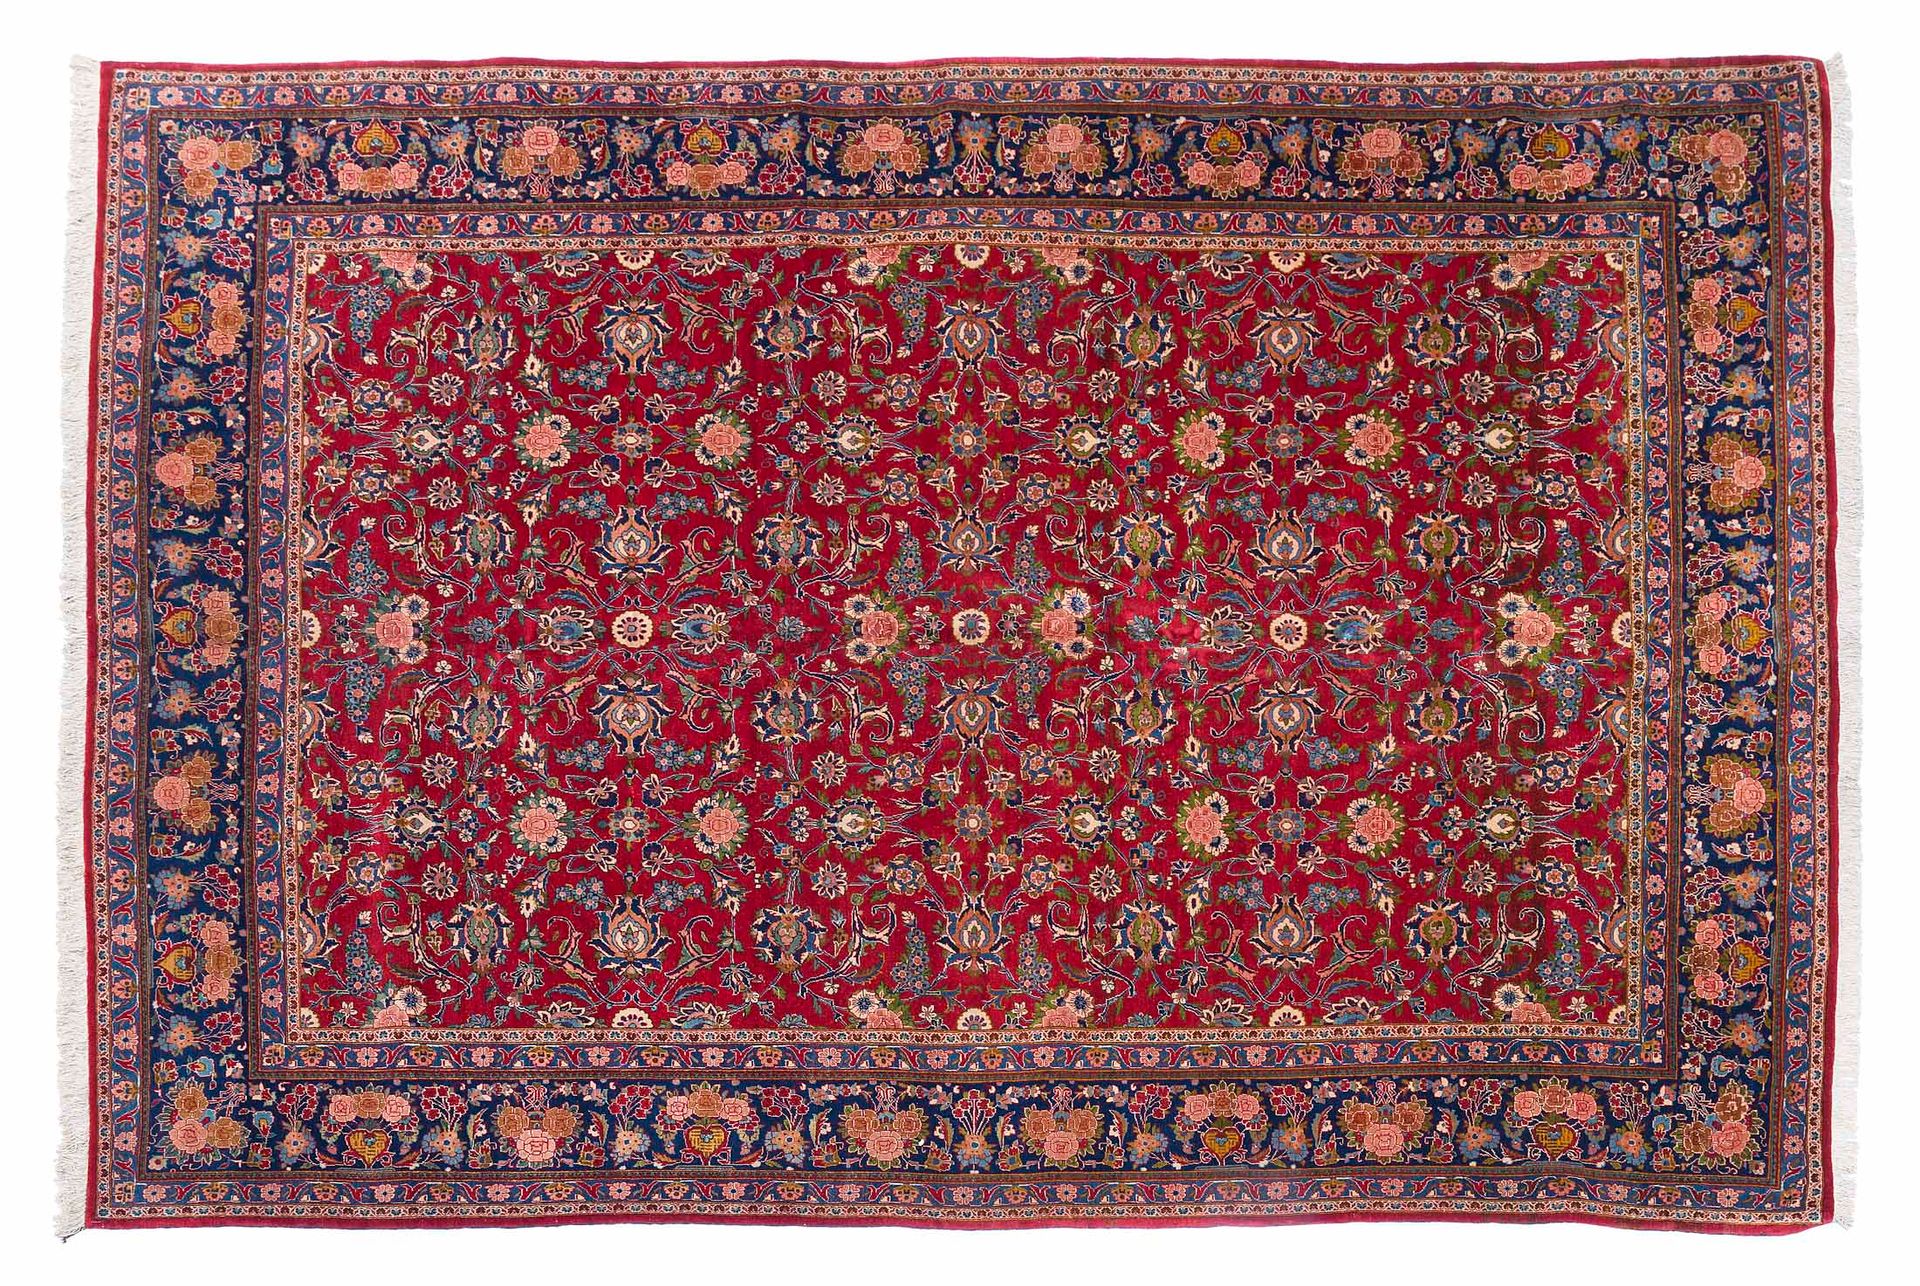 Null KACHAN地毯（伊朗），20世纪中期

尺寸：357 x 268厘米。

技术特点 : 羊毛丝绒，棉质基础。

一个红宝石领域承载着多色花卷的播种，&hellip;